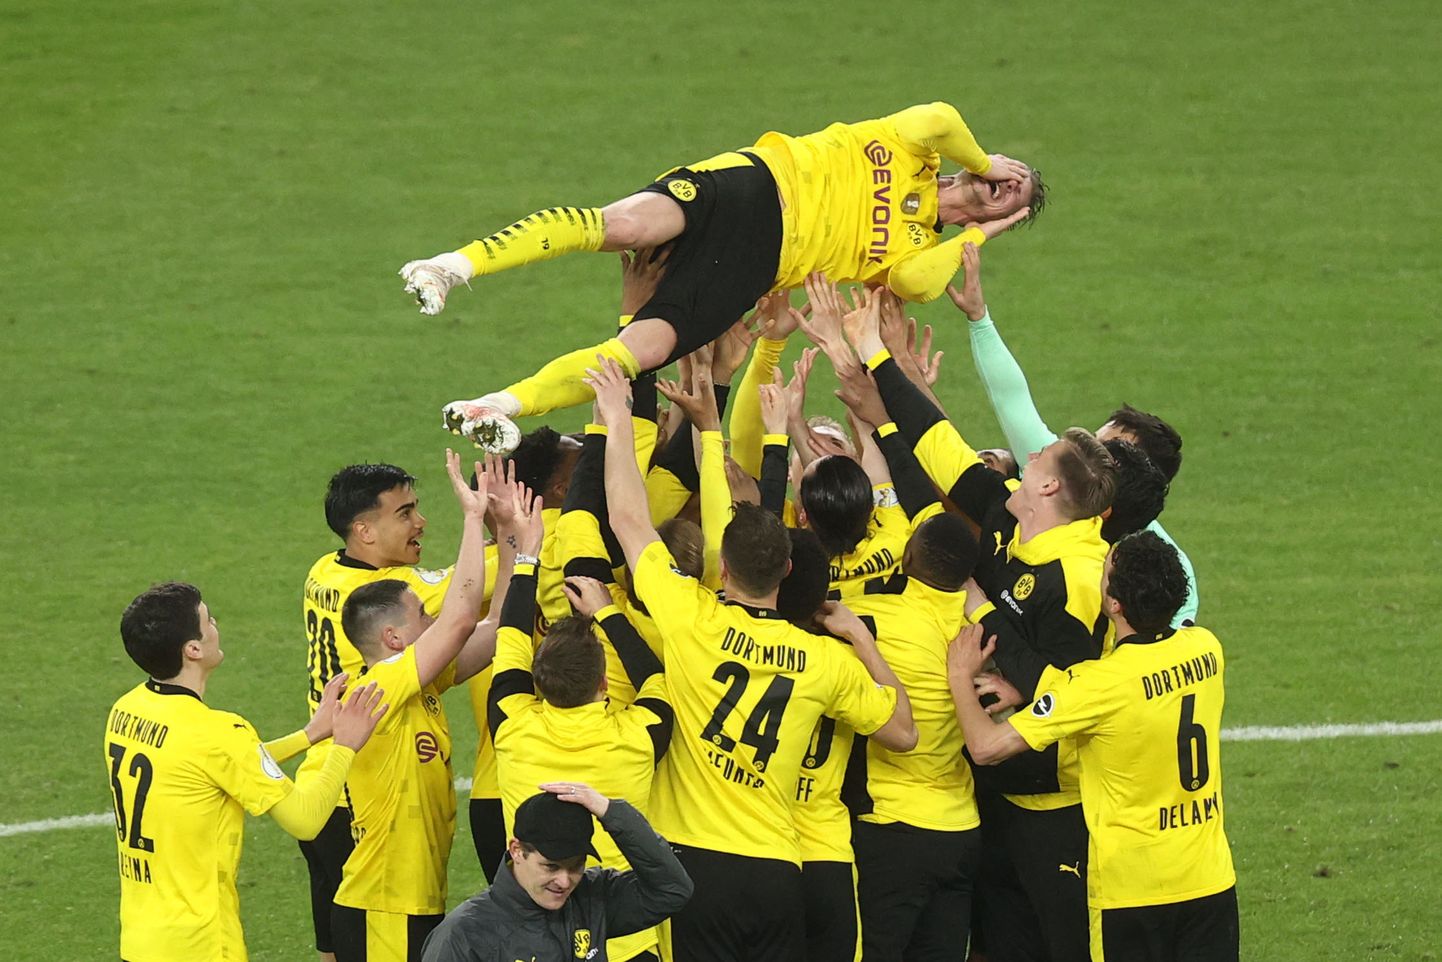 Dortmundes "Borussia" futbolisti